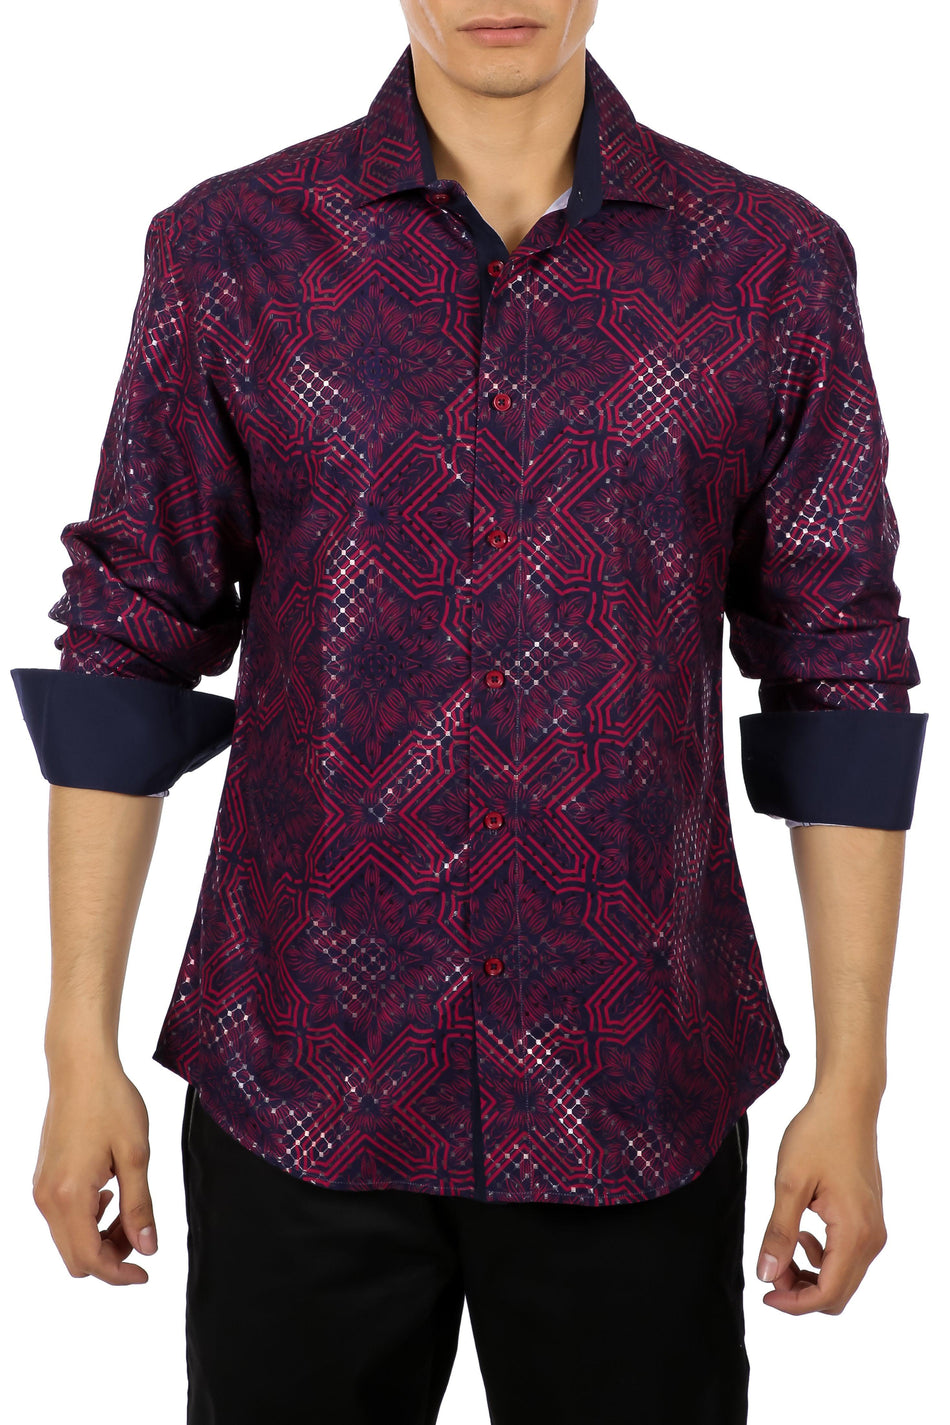 Men's Printed Purple Button Up Long Sleeve Dress Shirt